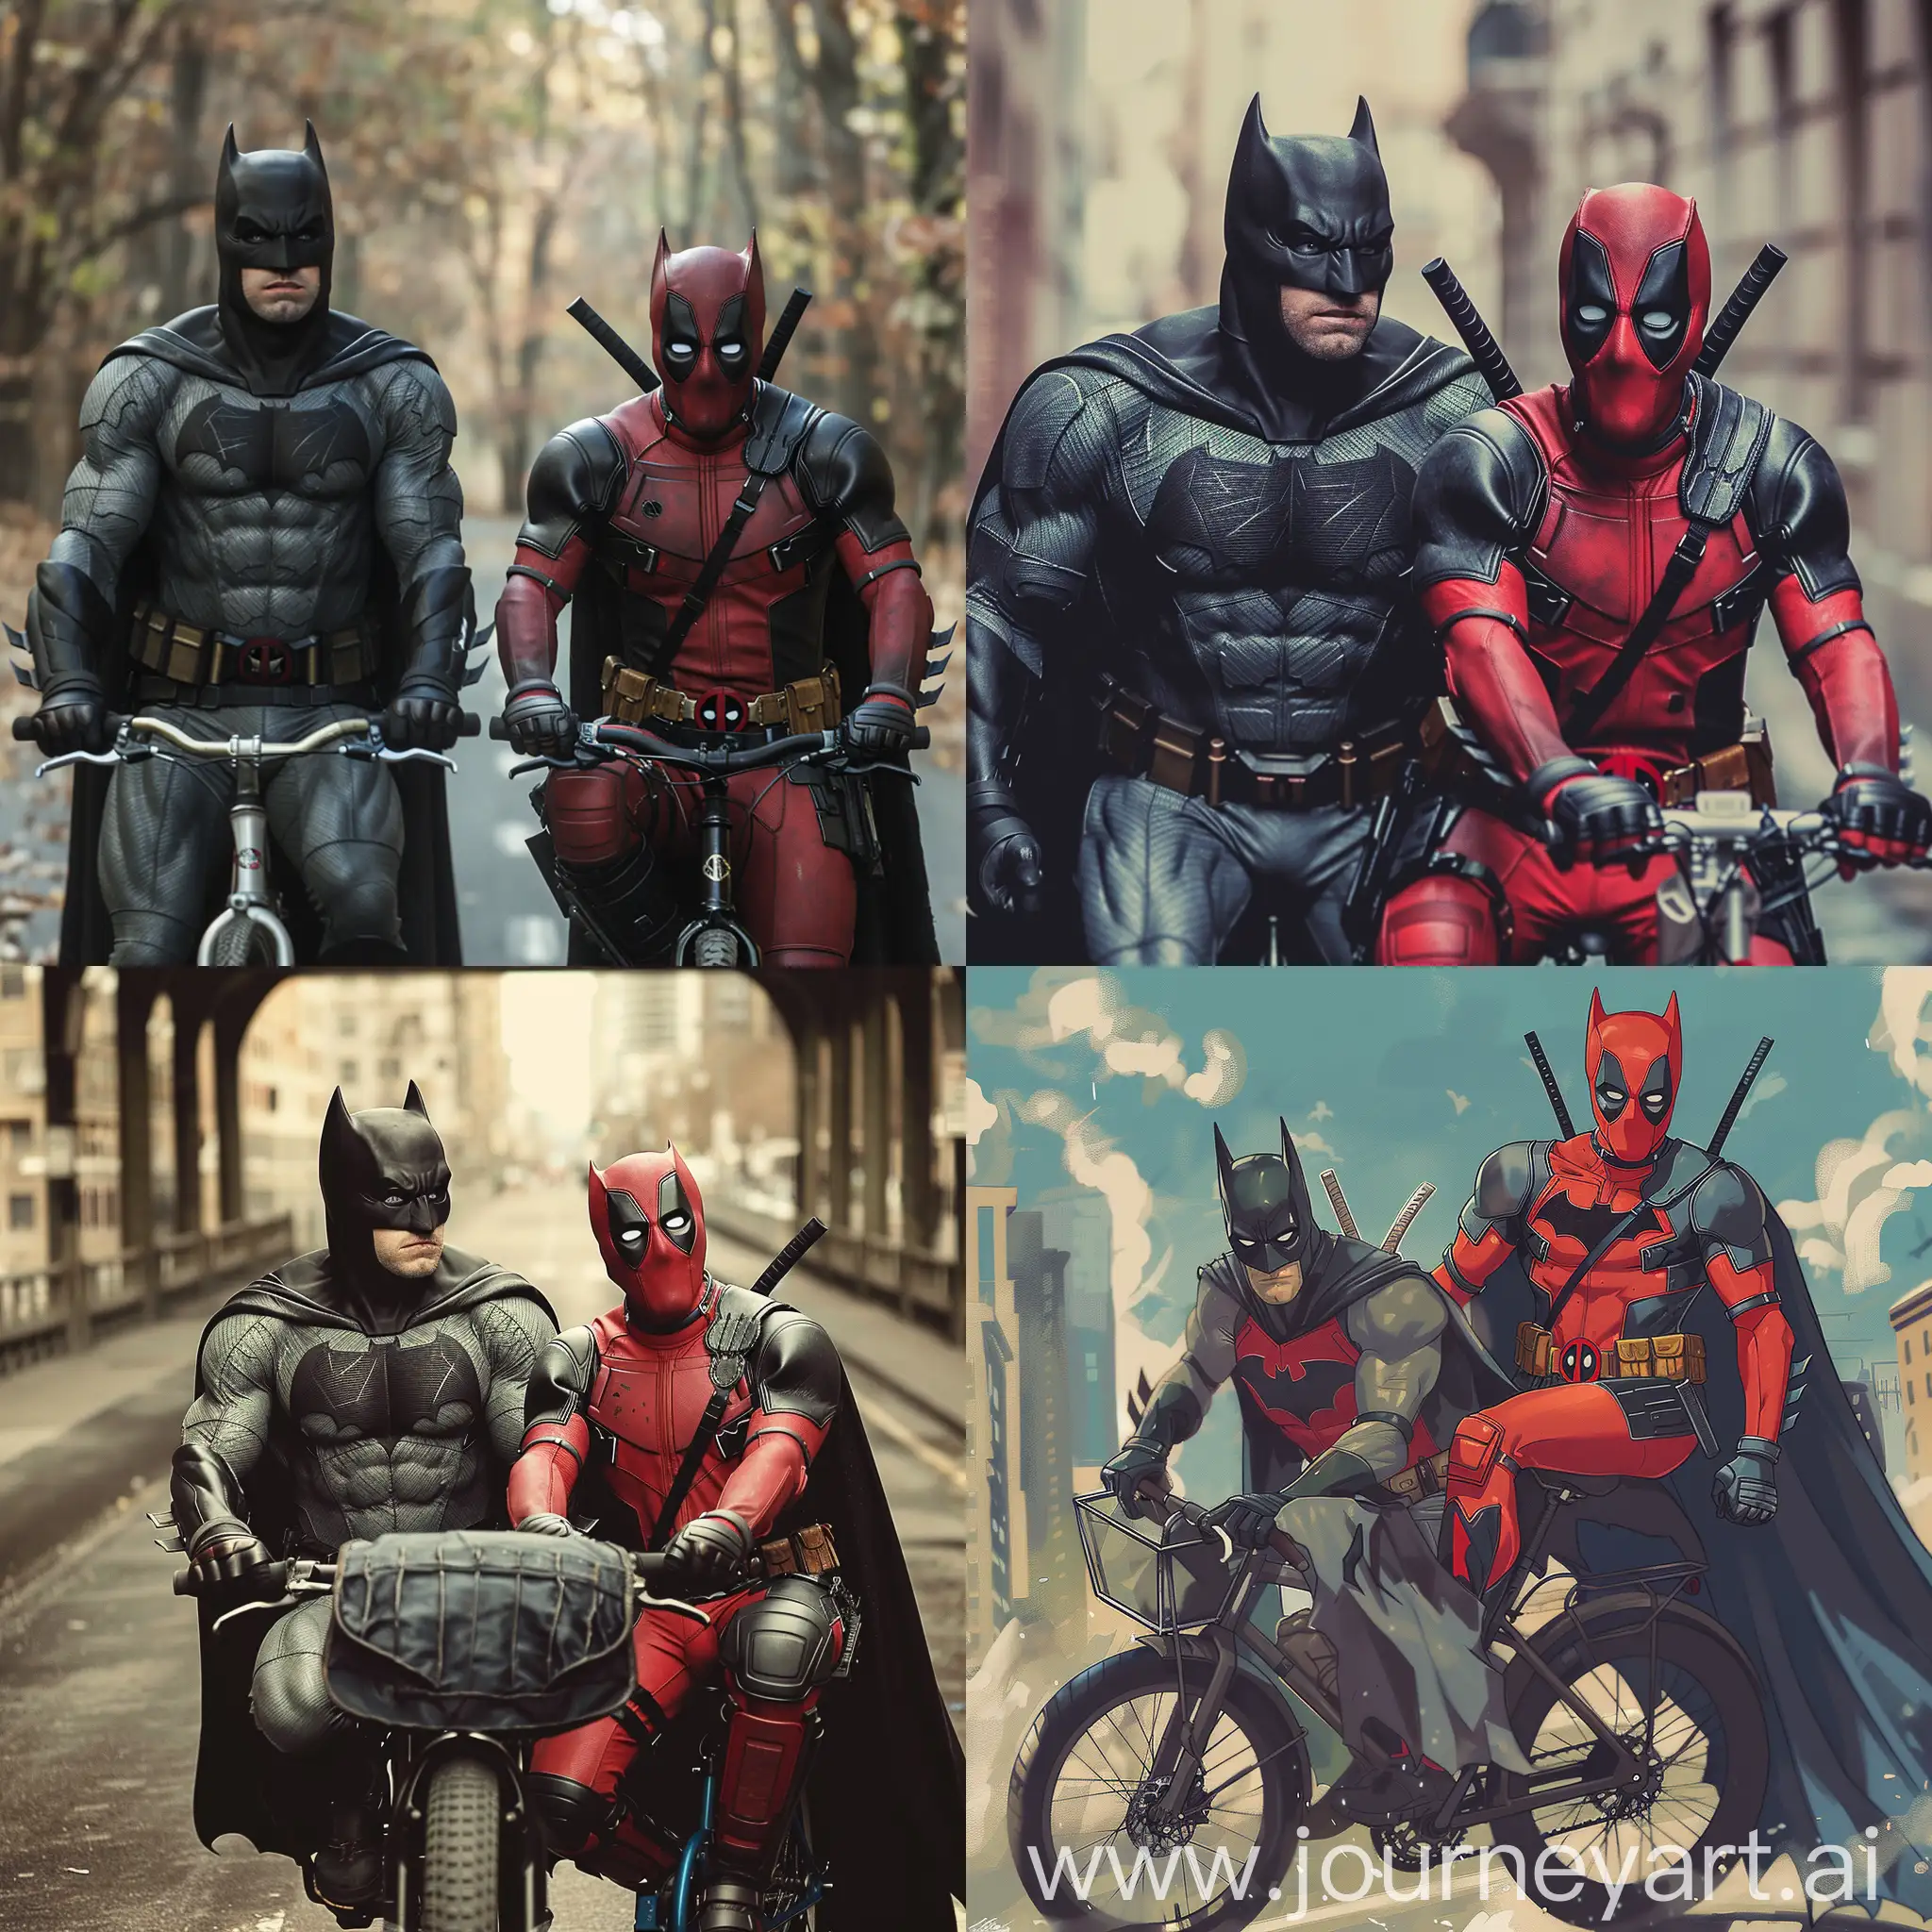 batman and deadpool on the bike
